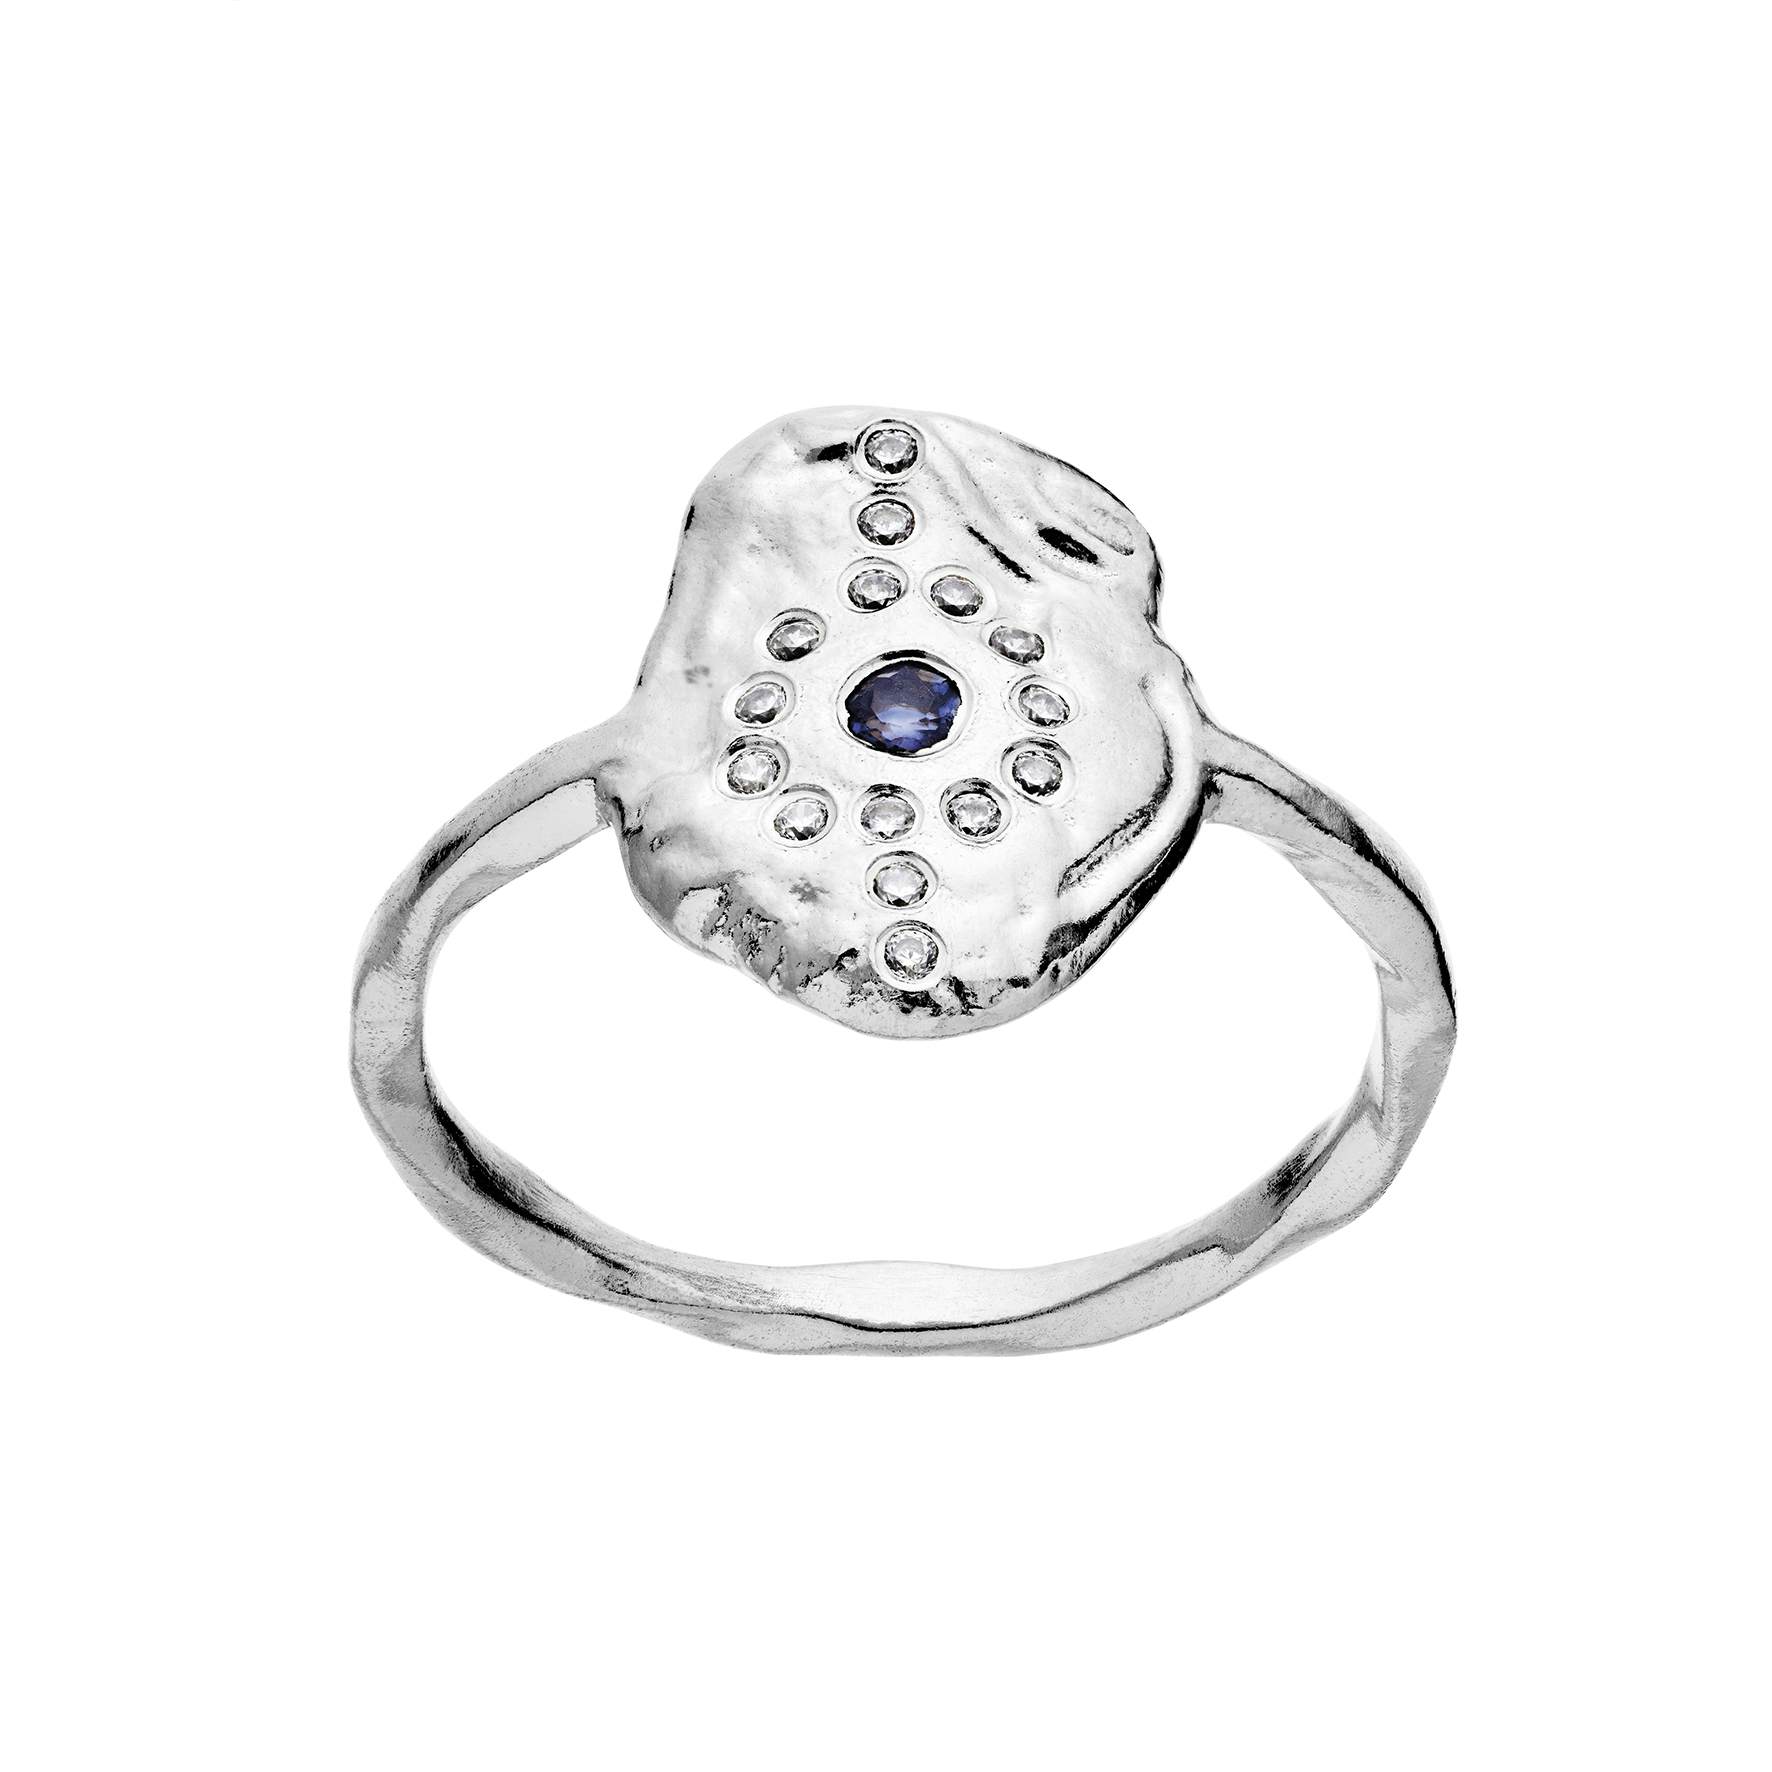 Enya Ring from Maanesten in Silver Sterling 925